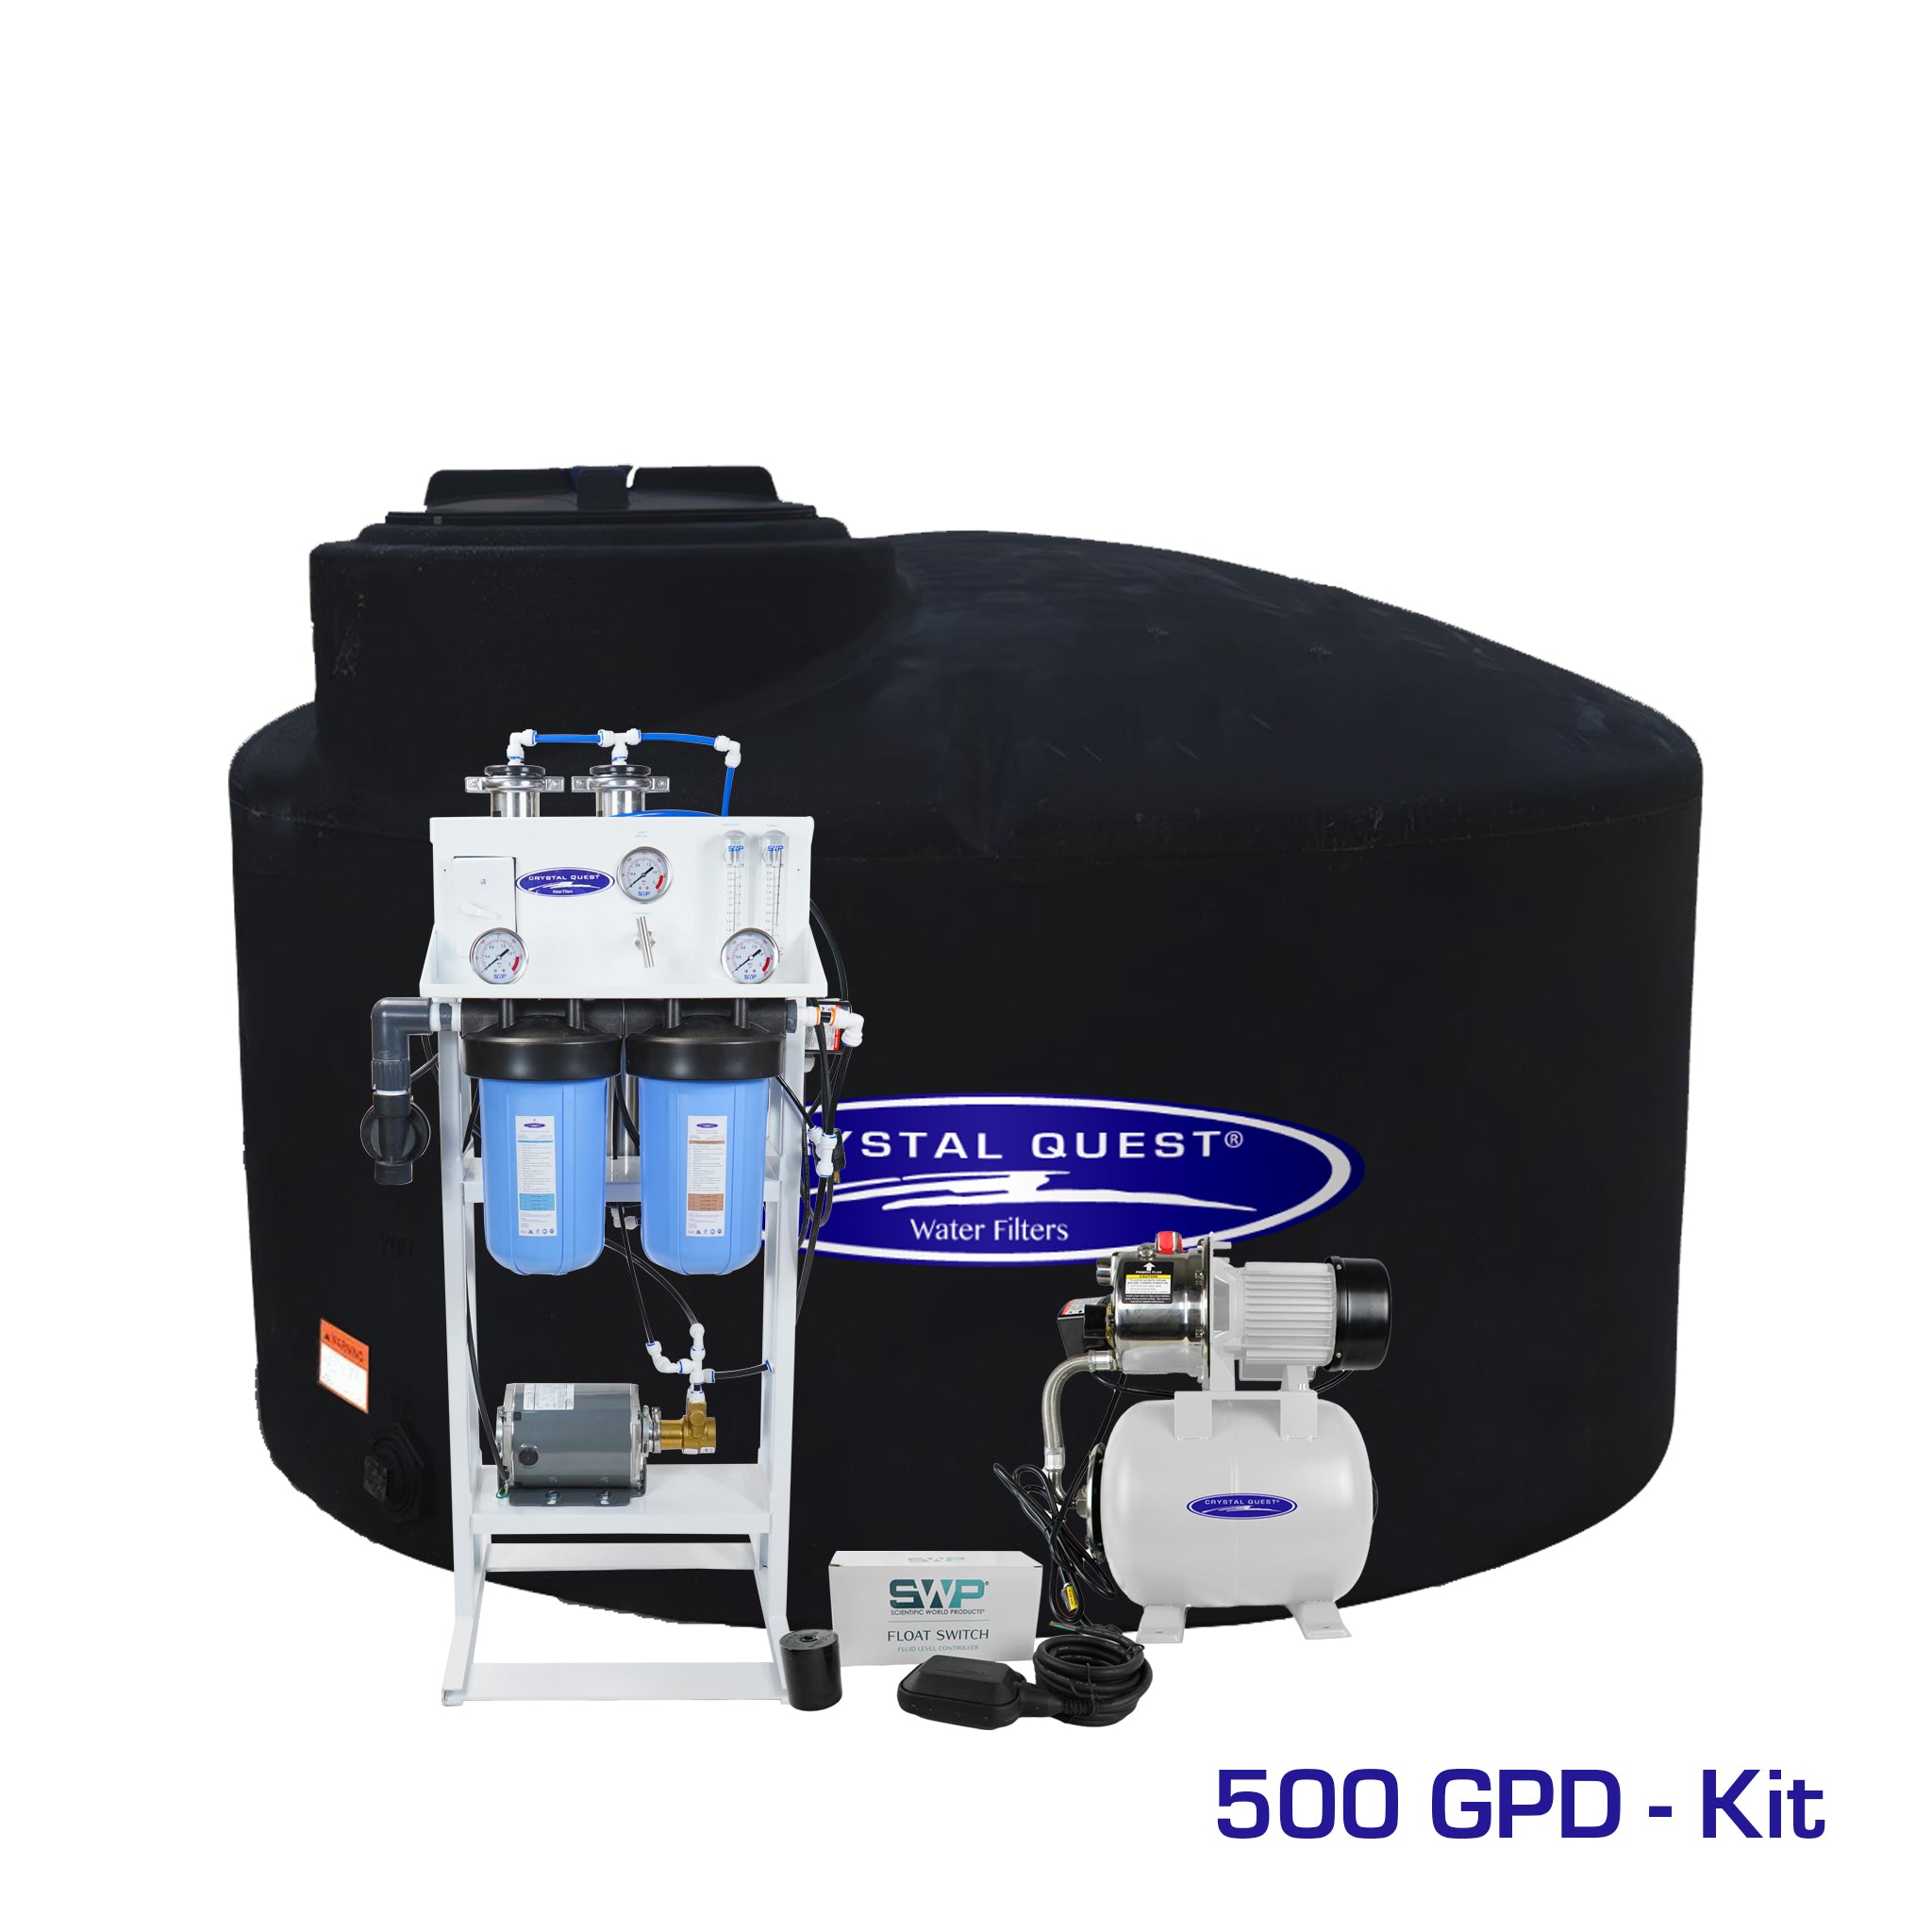 500 GPD / Add Storage Tank Kit (550 Gal) Whole House Reverse Osmosis System - Reverse Osmosis System - Crystal Quest